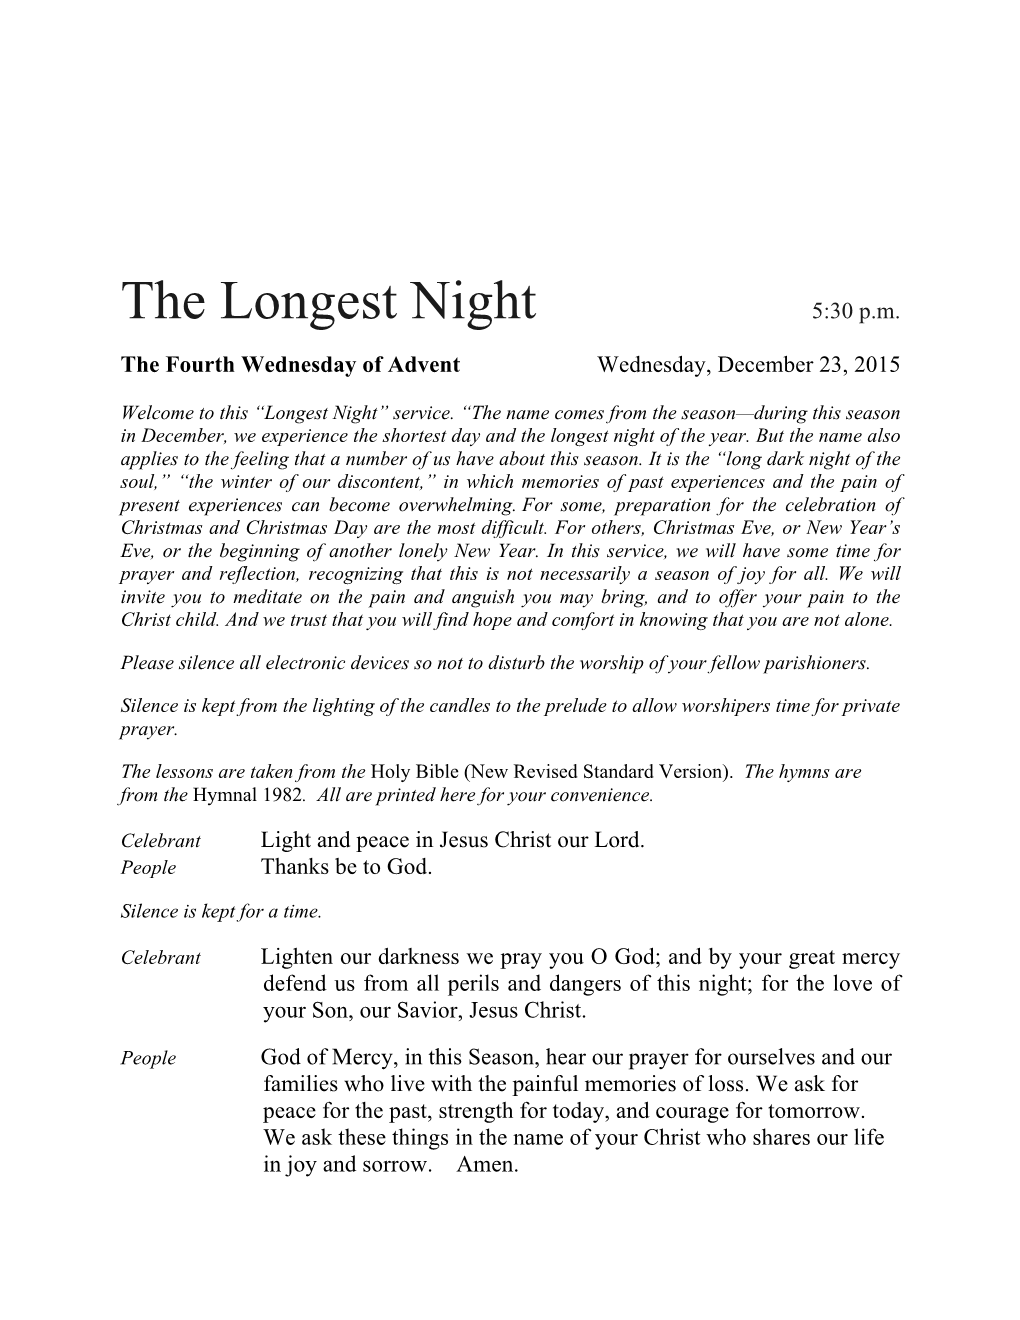 The Longest Night 5:30 P.M